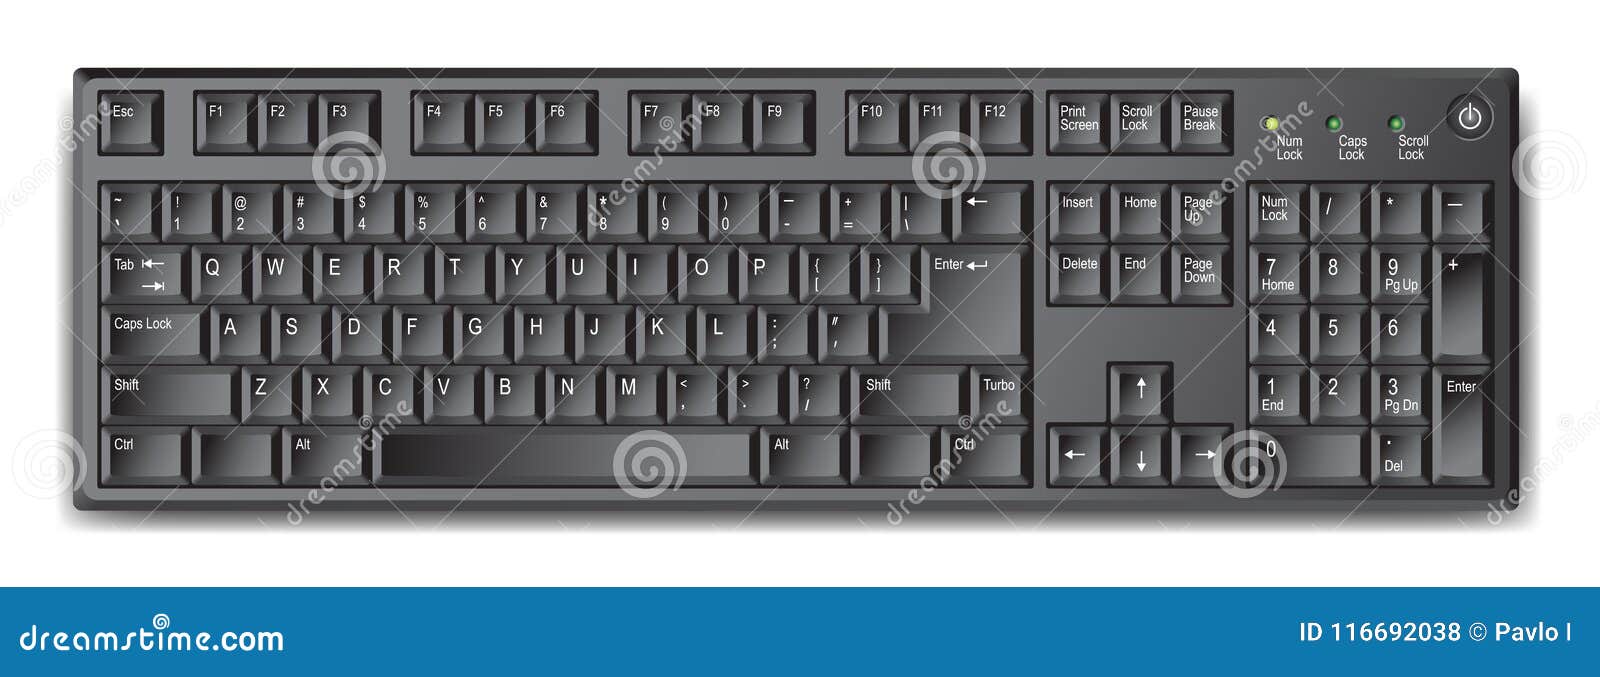 black qwerty keyboard with us english layout - stock 